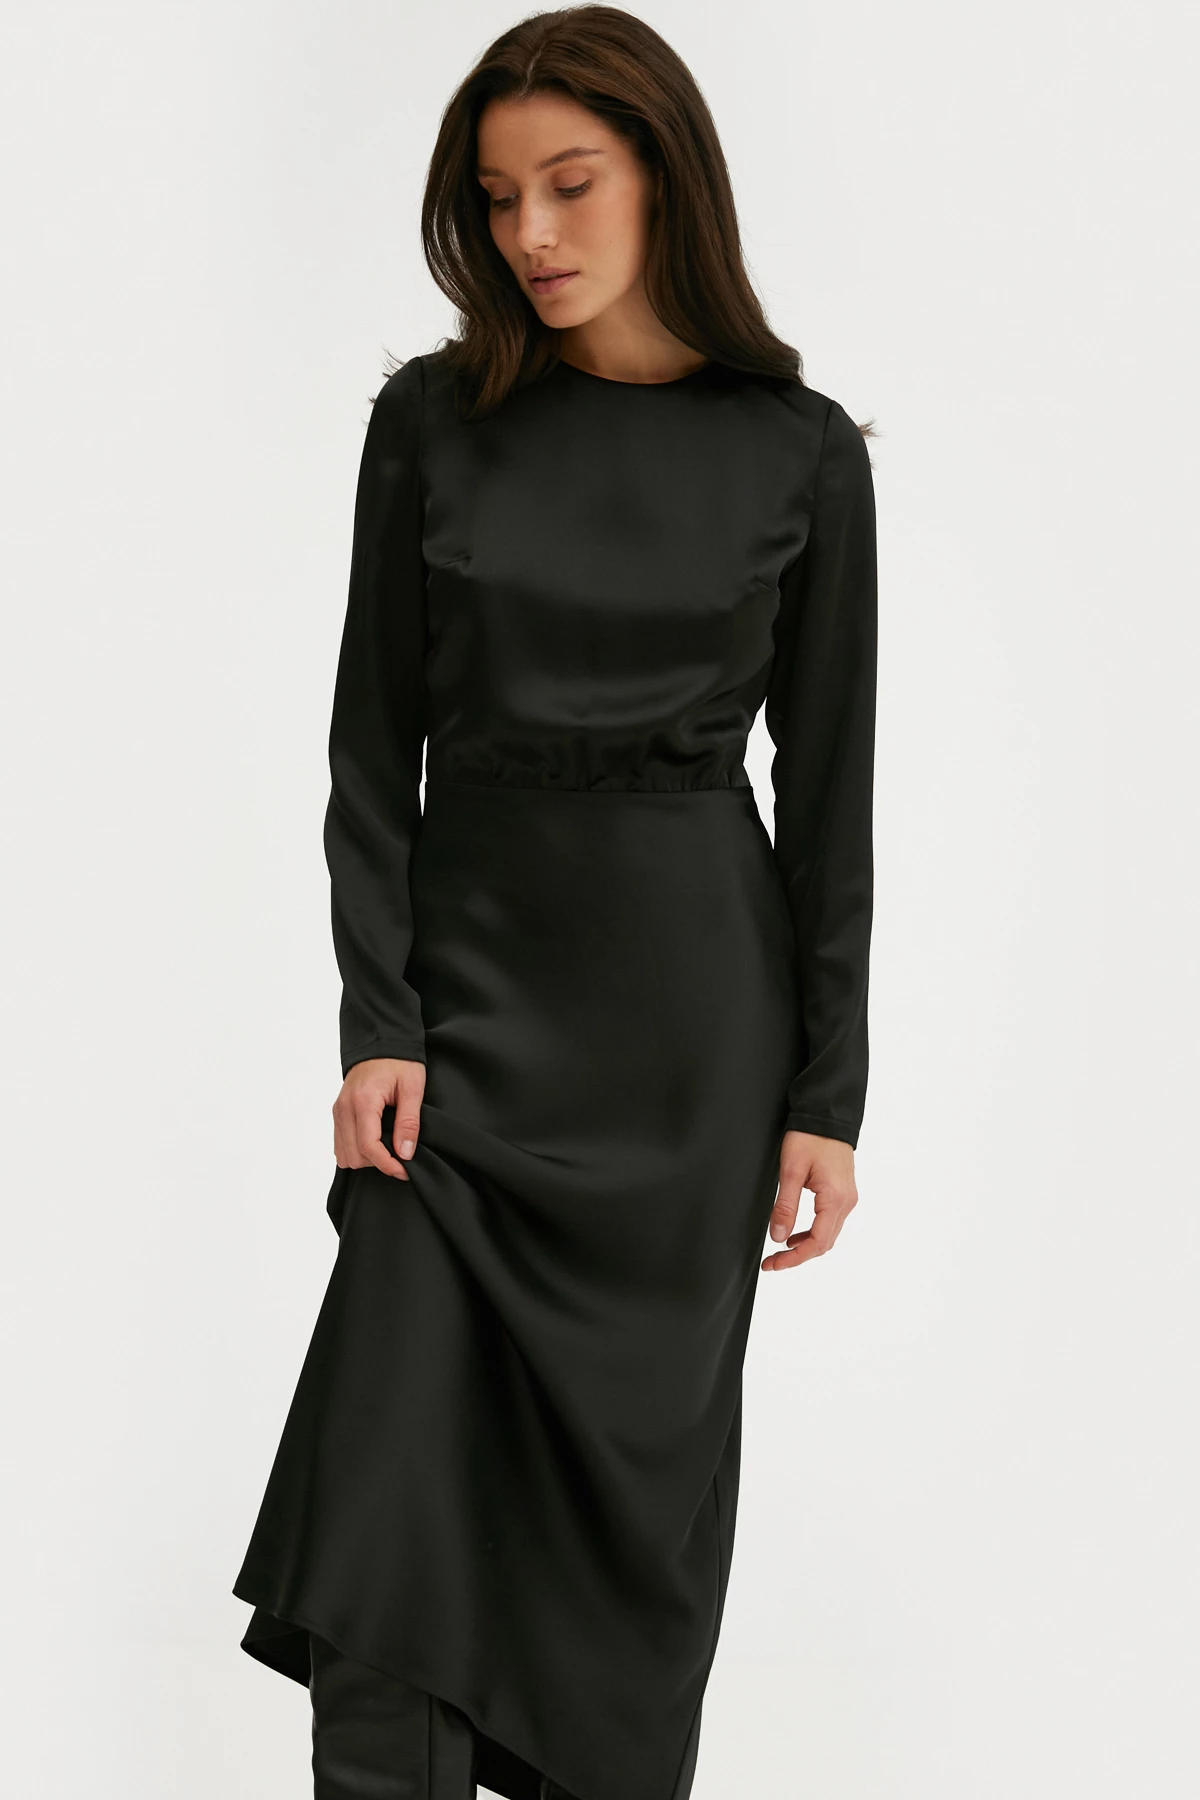 Satin black dress with sleeves, photo 1